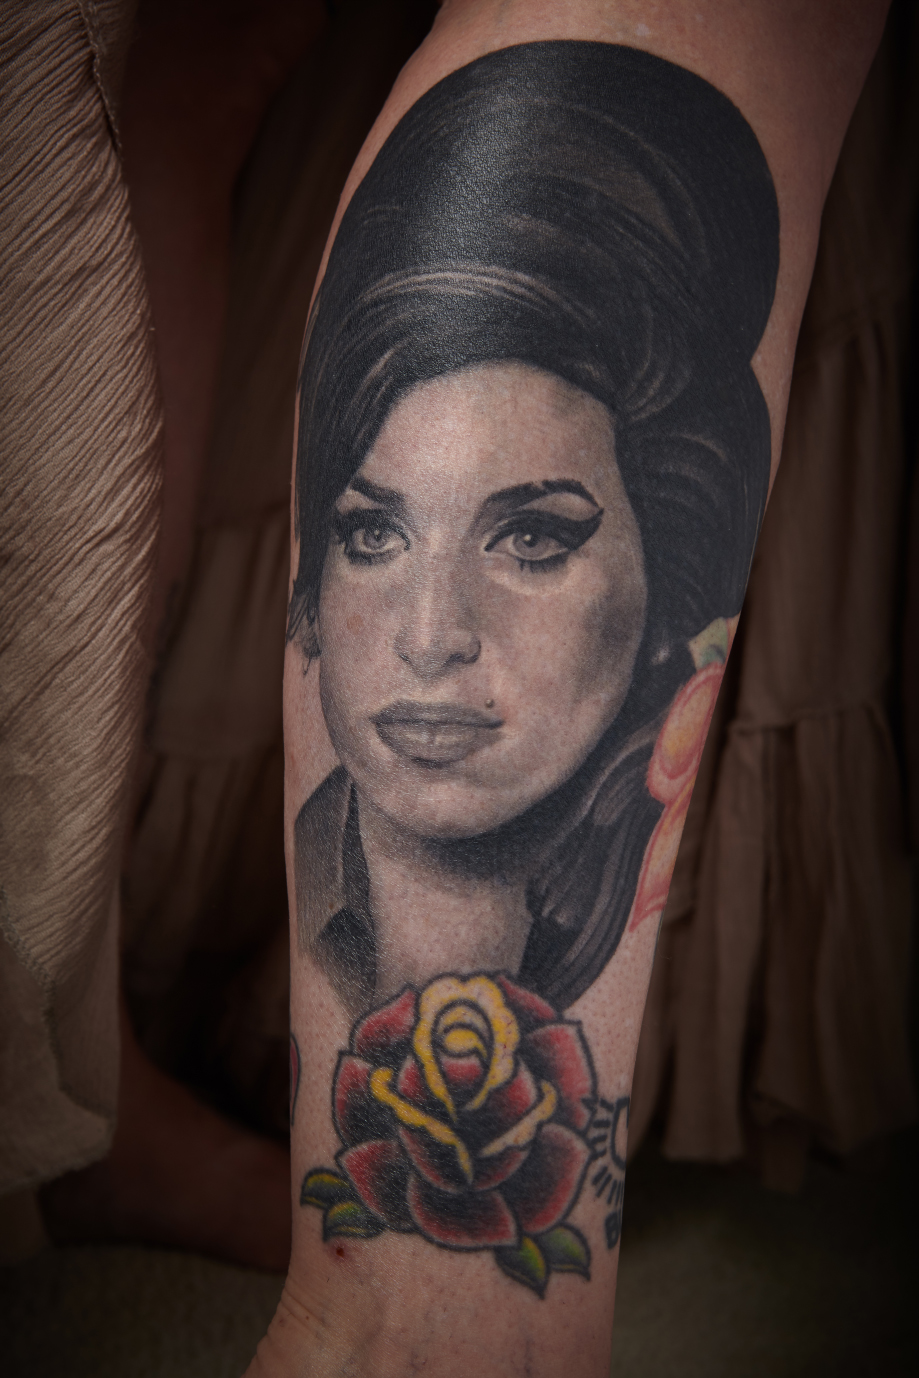 Princess Hilla show her tatto of Amy Winehouse